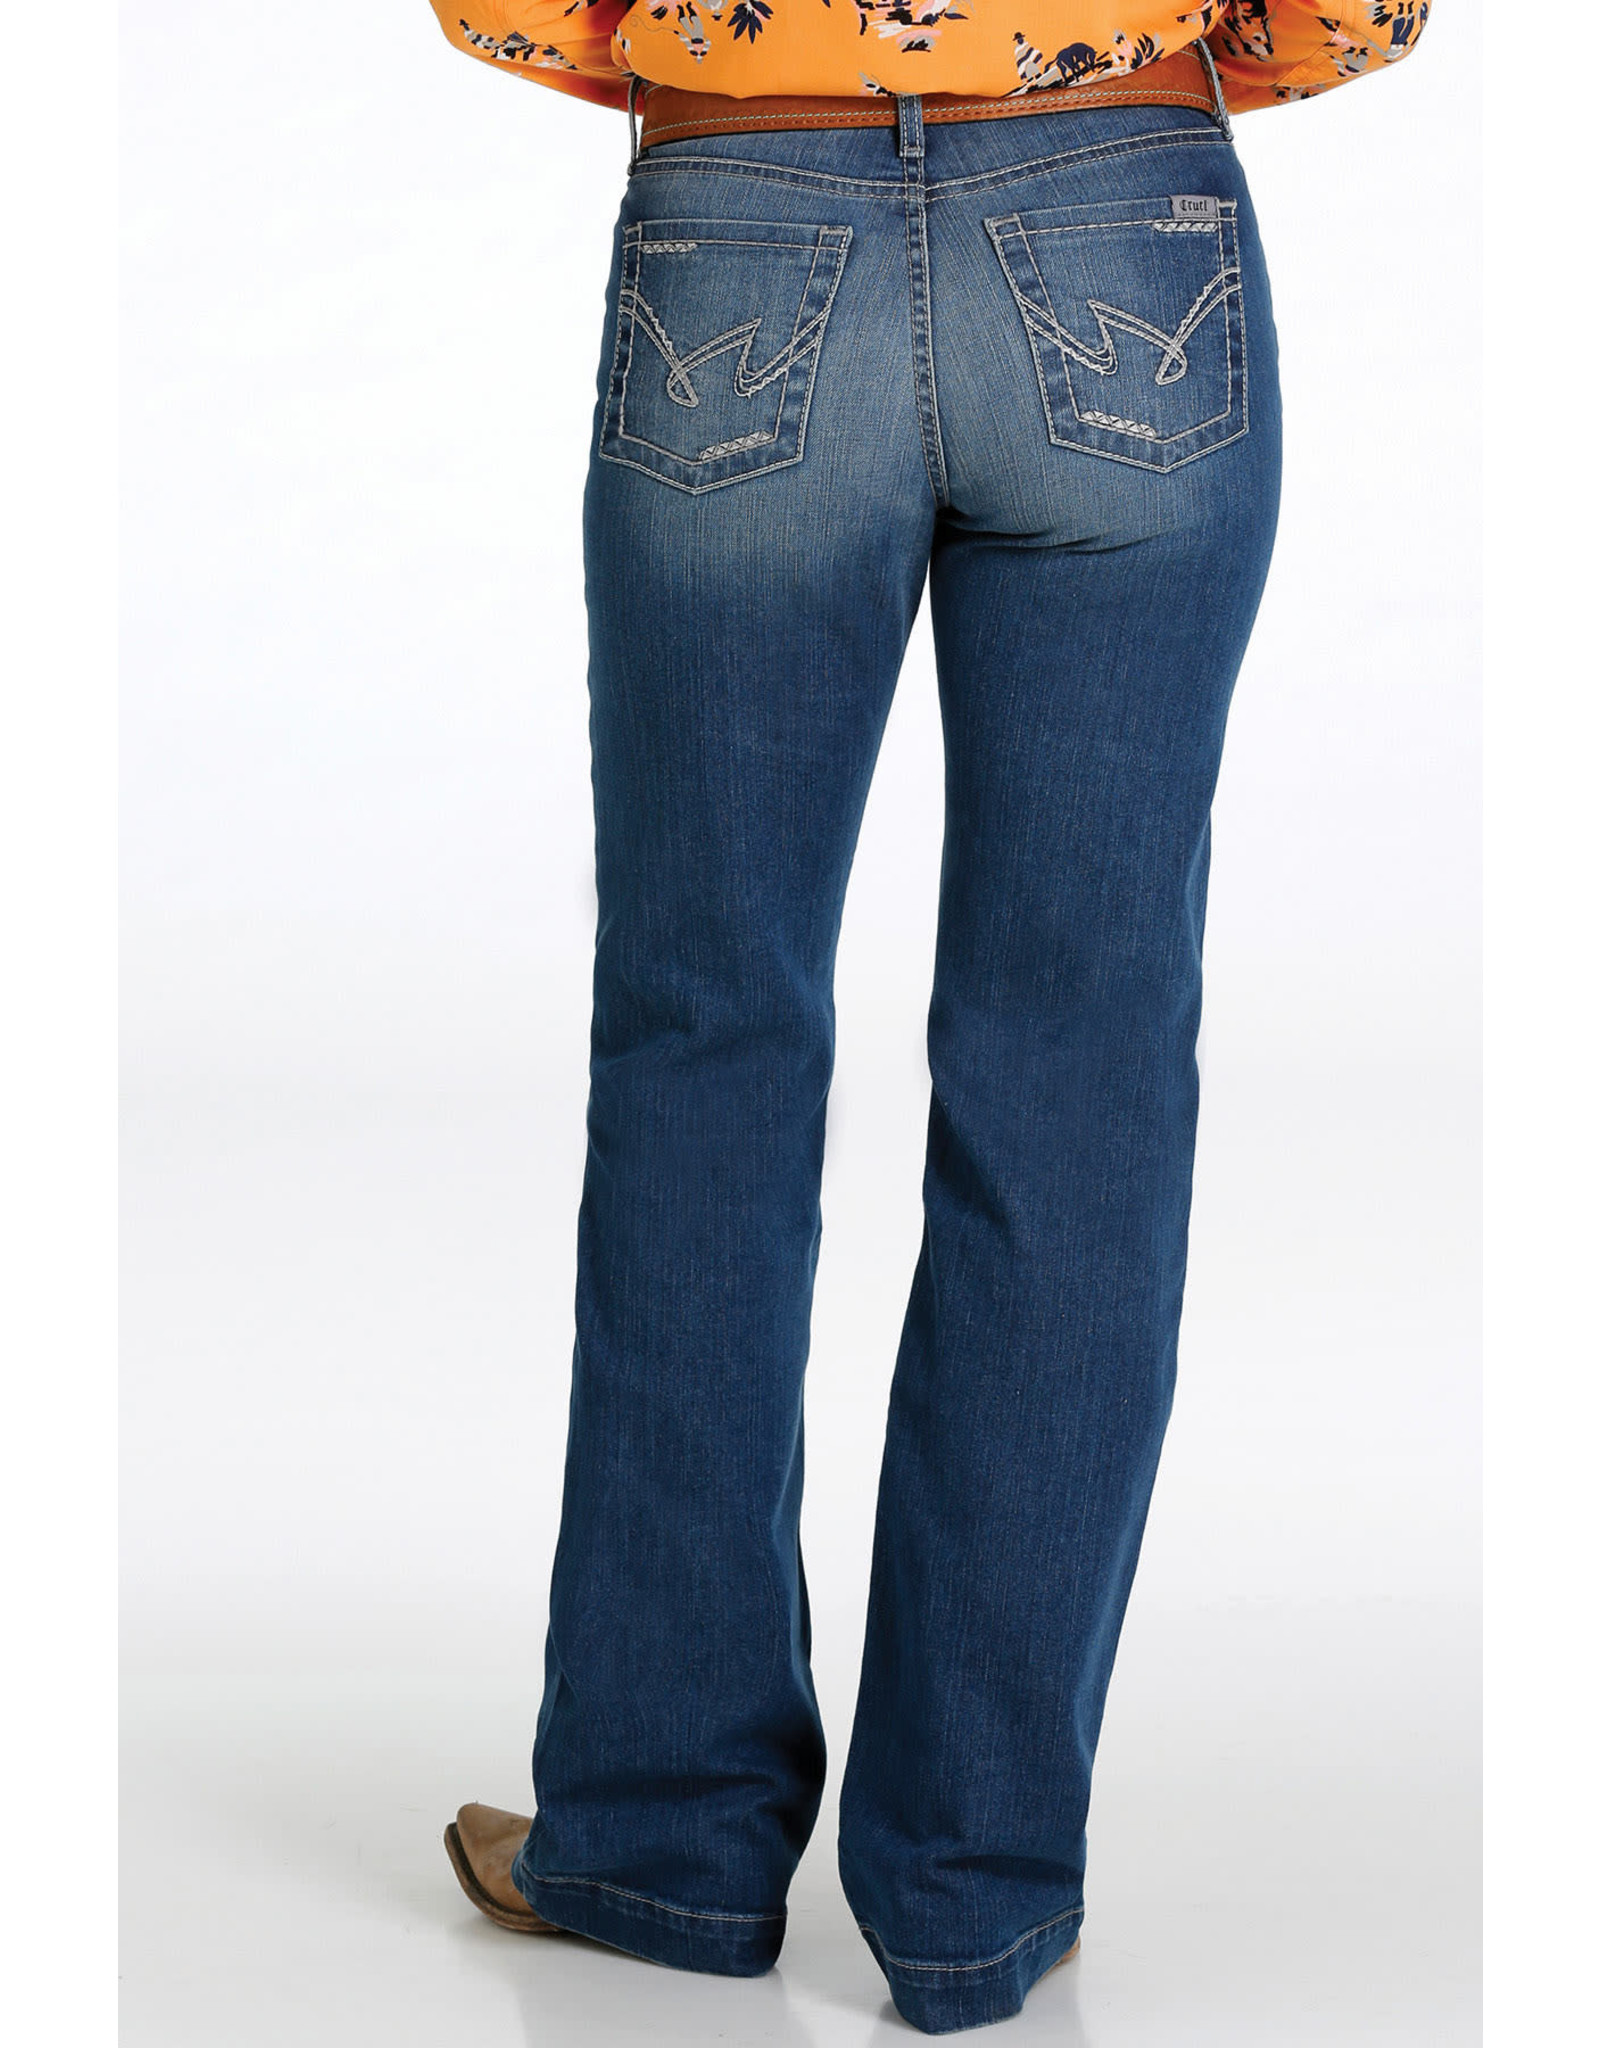 Cruel Girl Women's Haley Trouser CB19554001 Moderate Rise Jeans